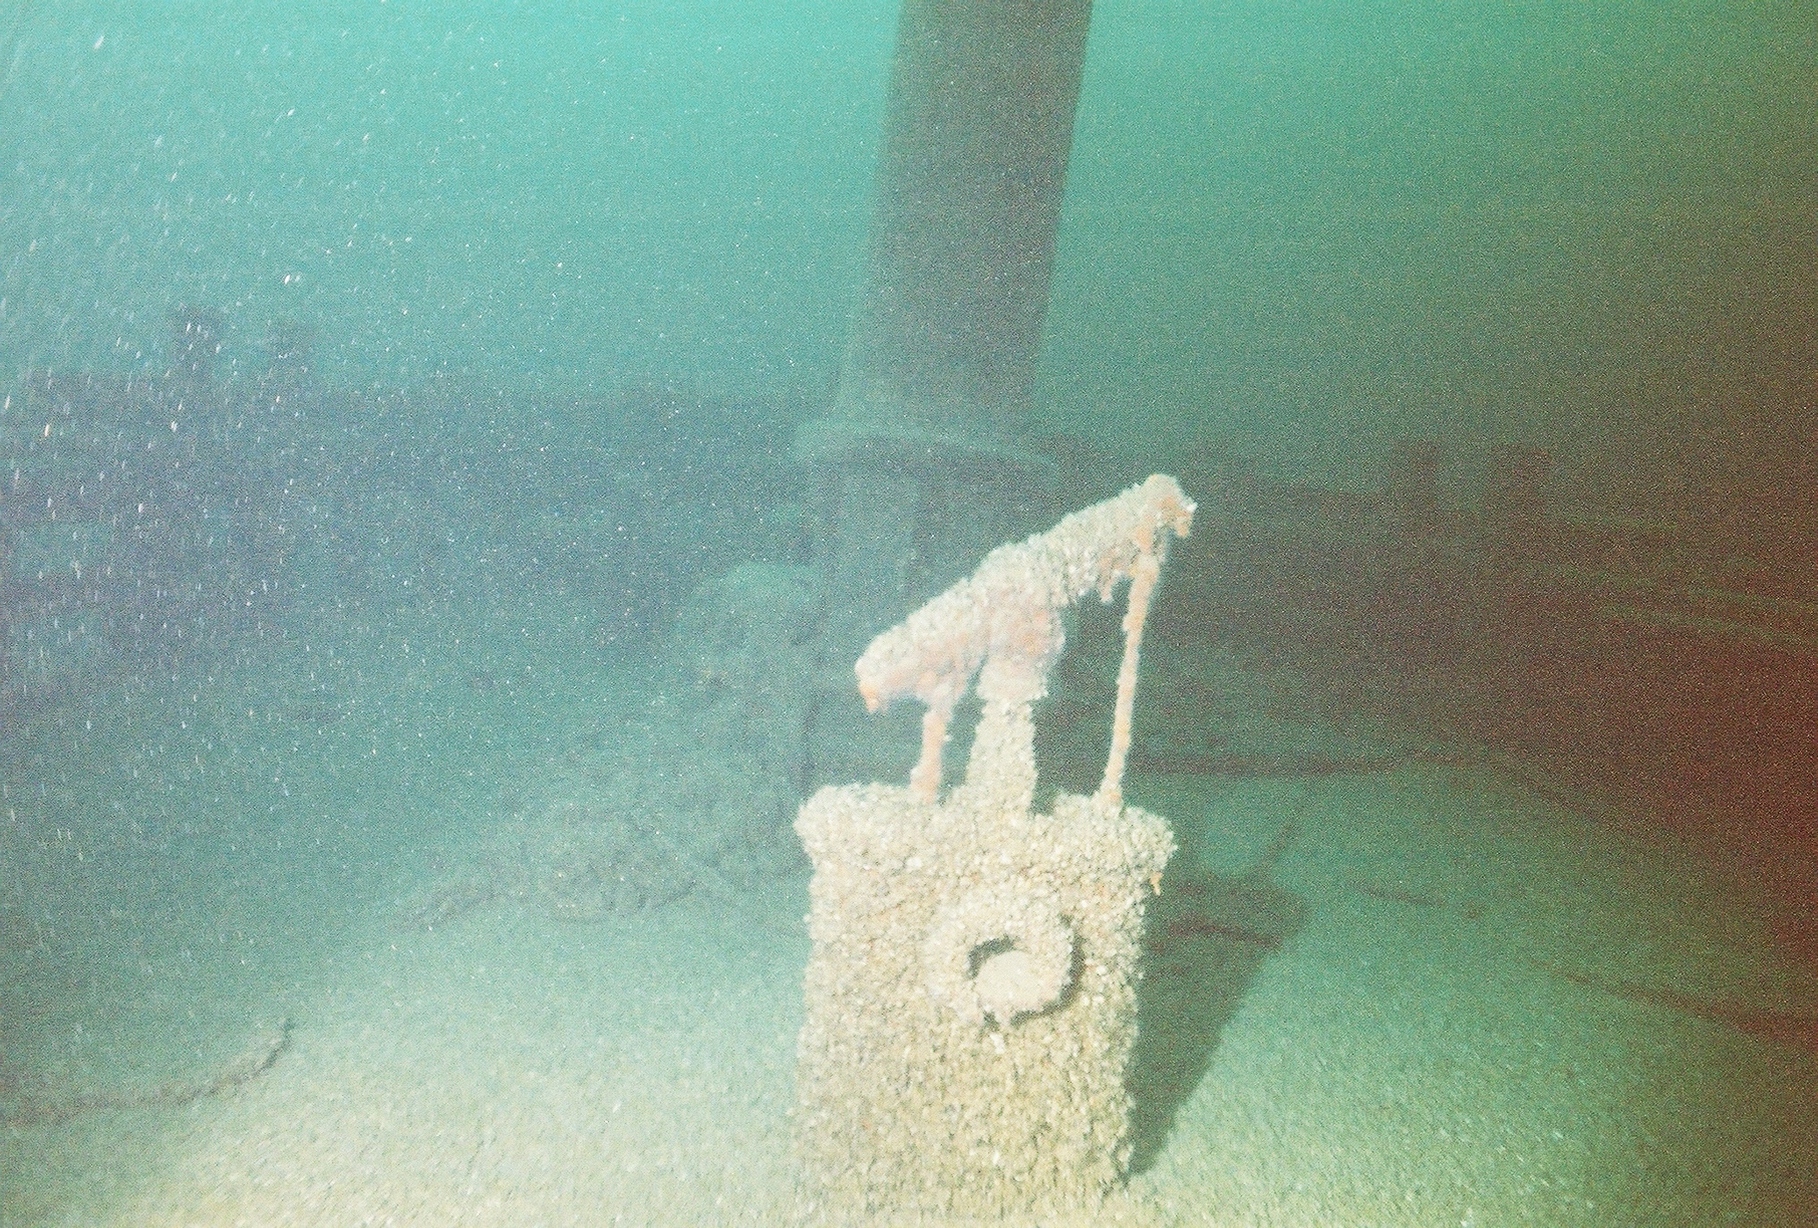 W.B Allen ship wreck